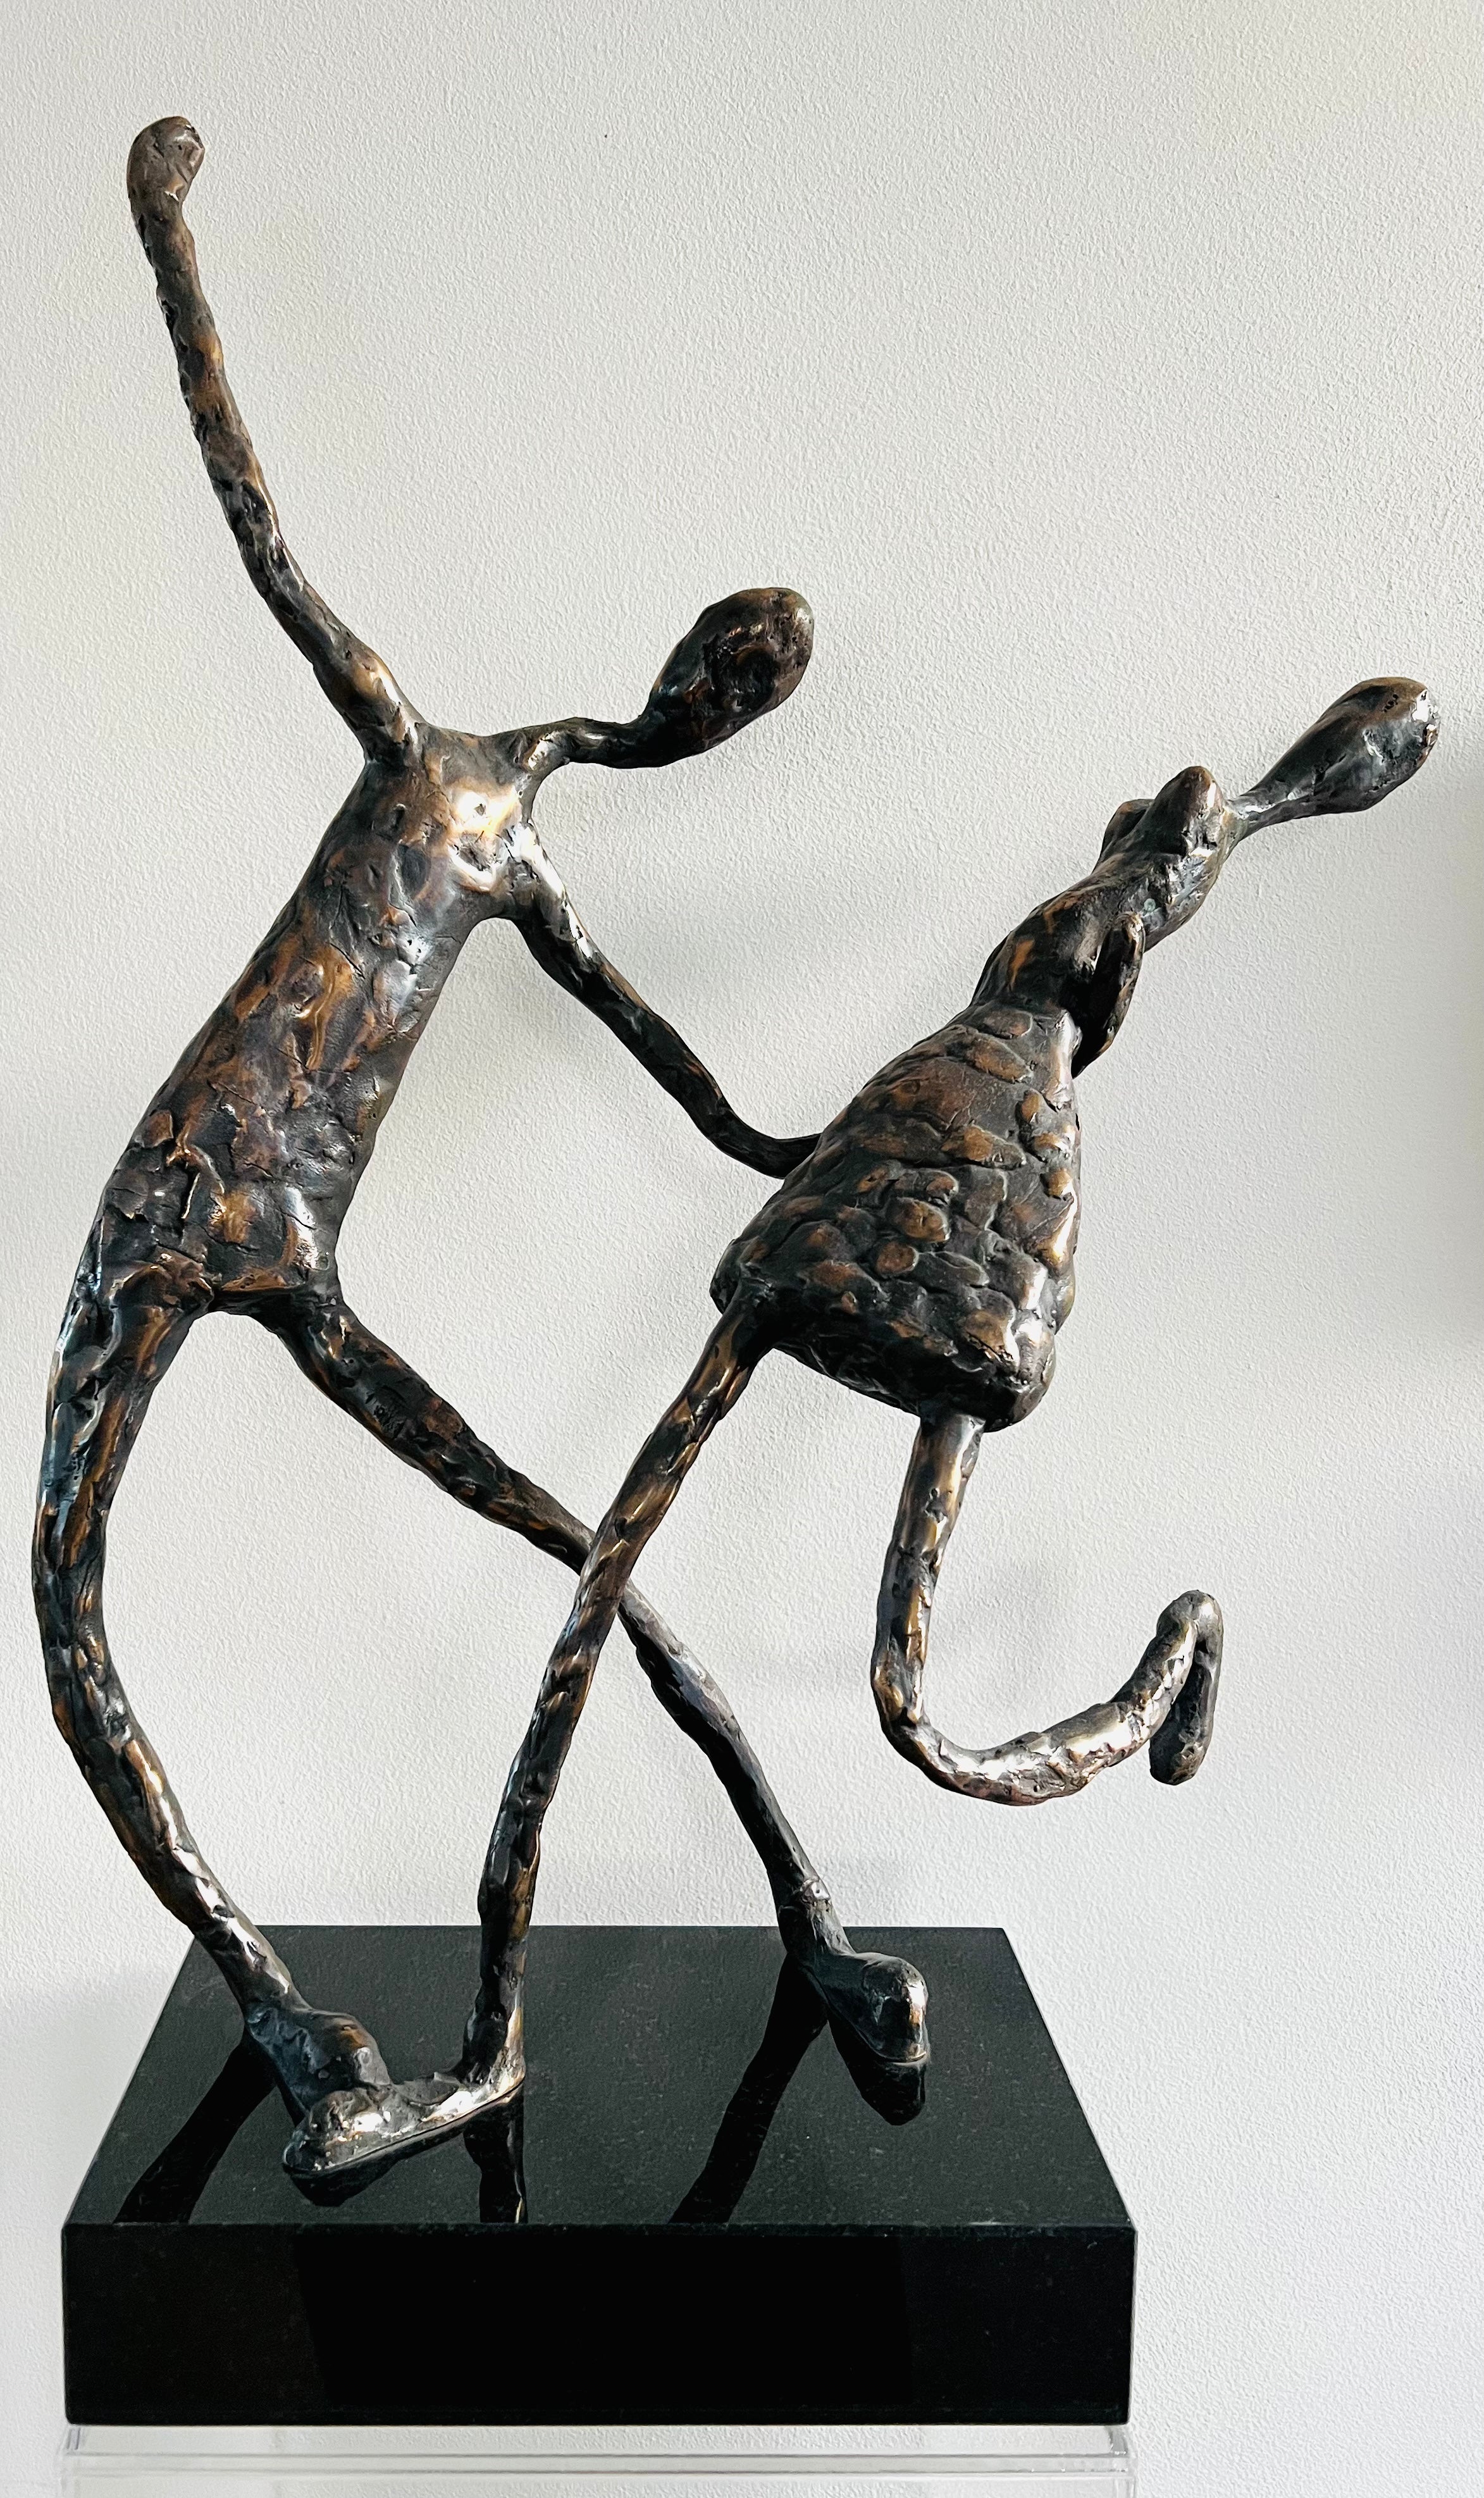 Ieva Bondare的青銅雕塑“ Let's Dance”（Uzdejosim）